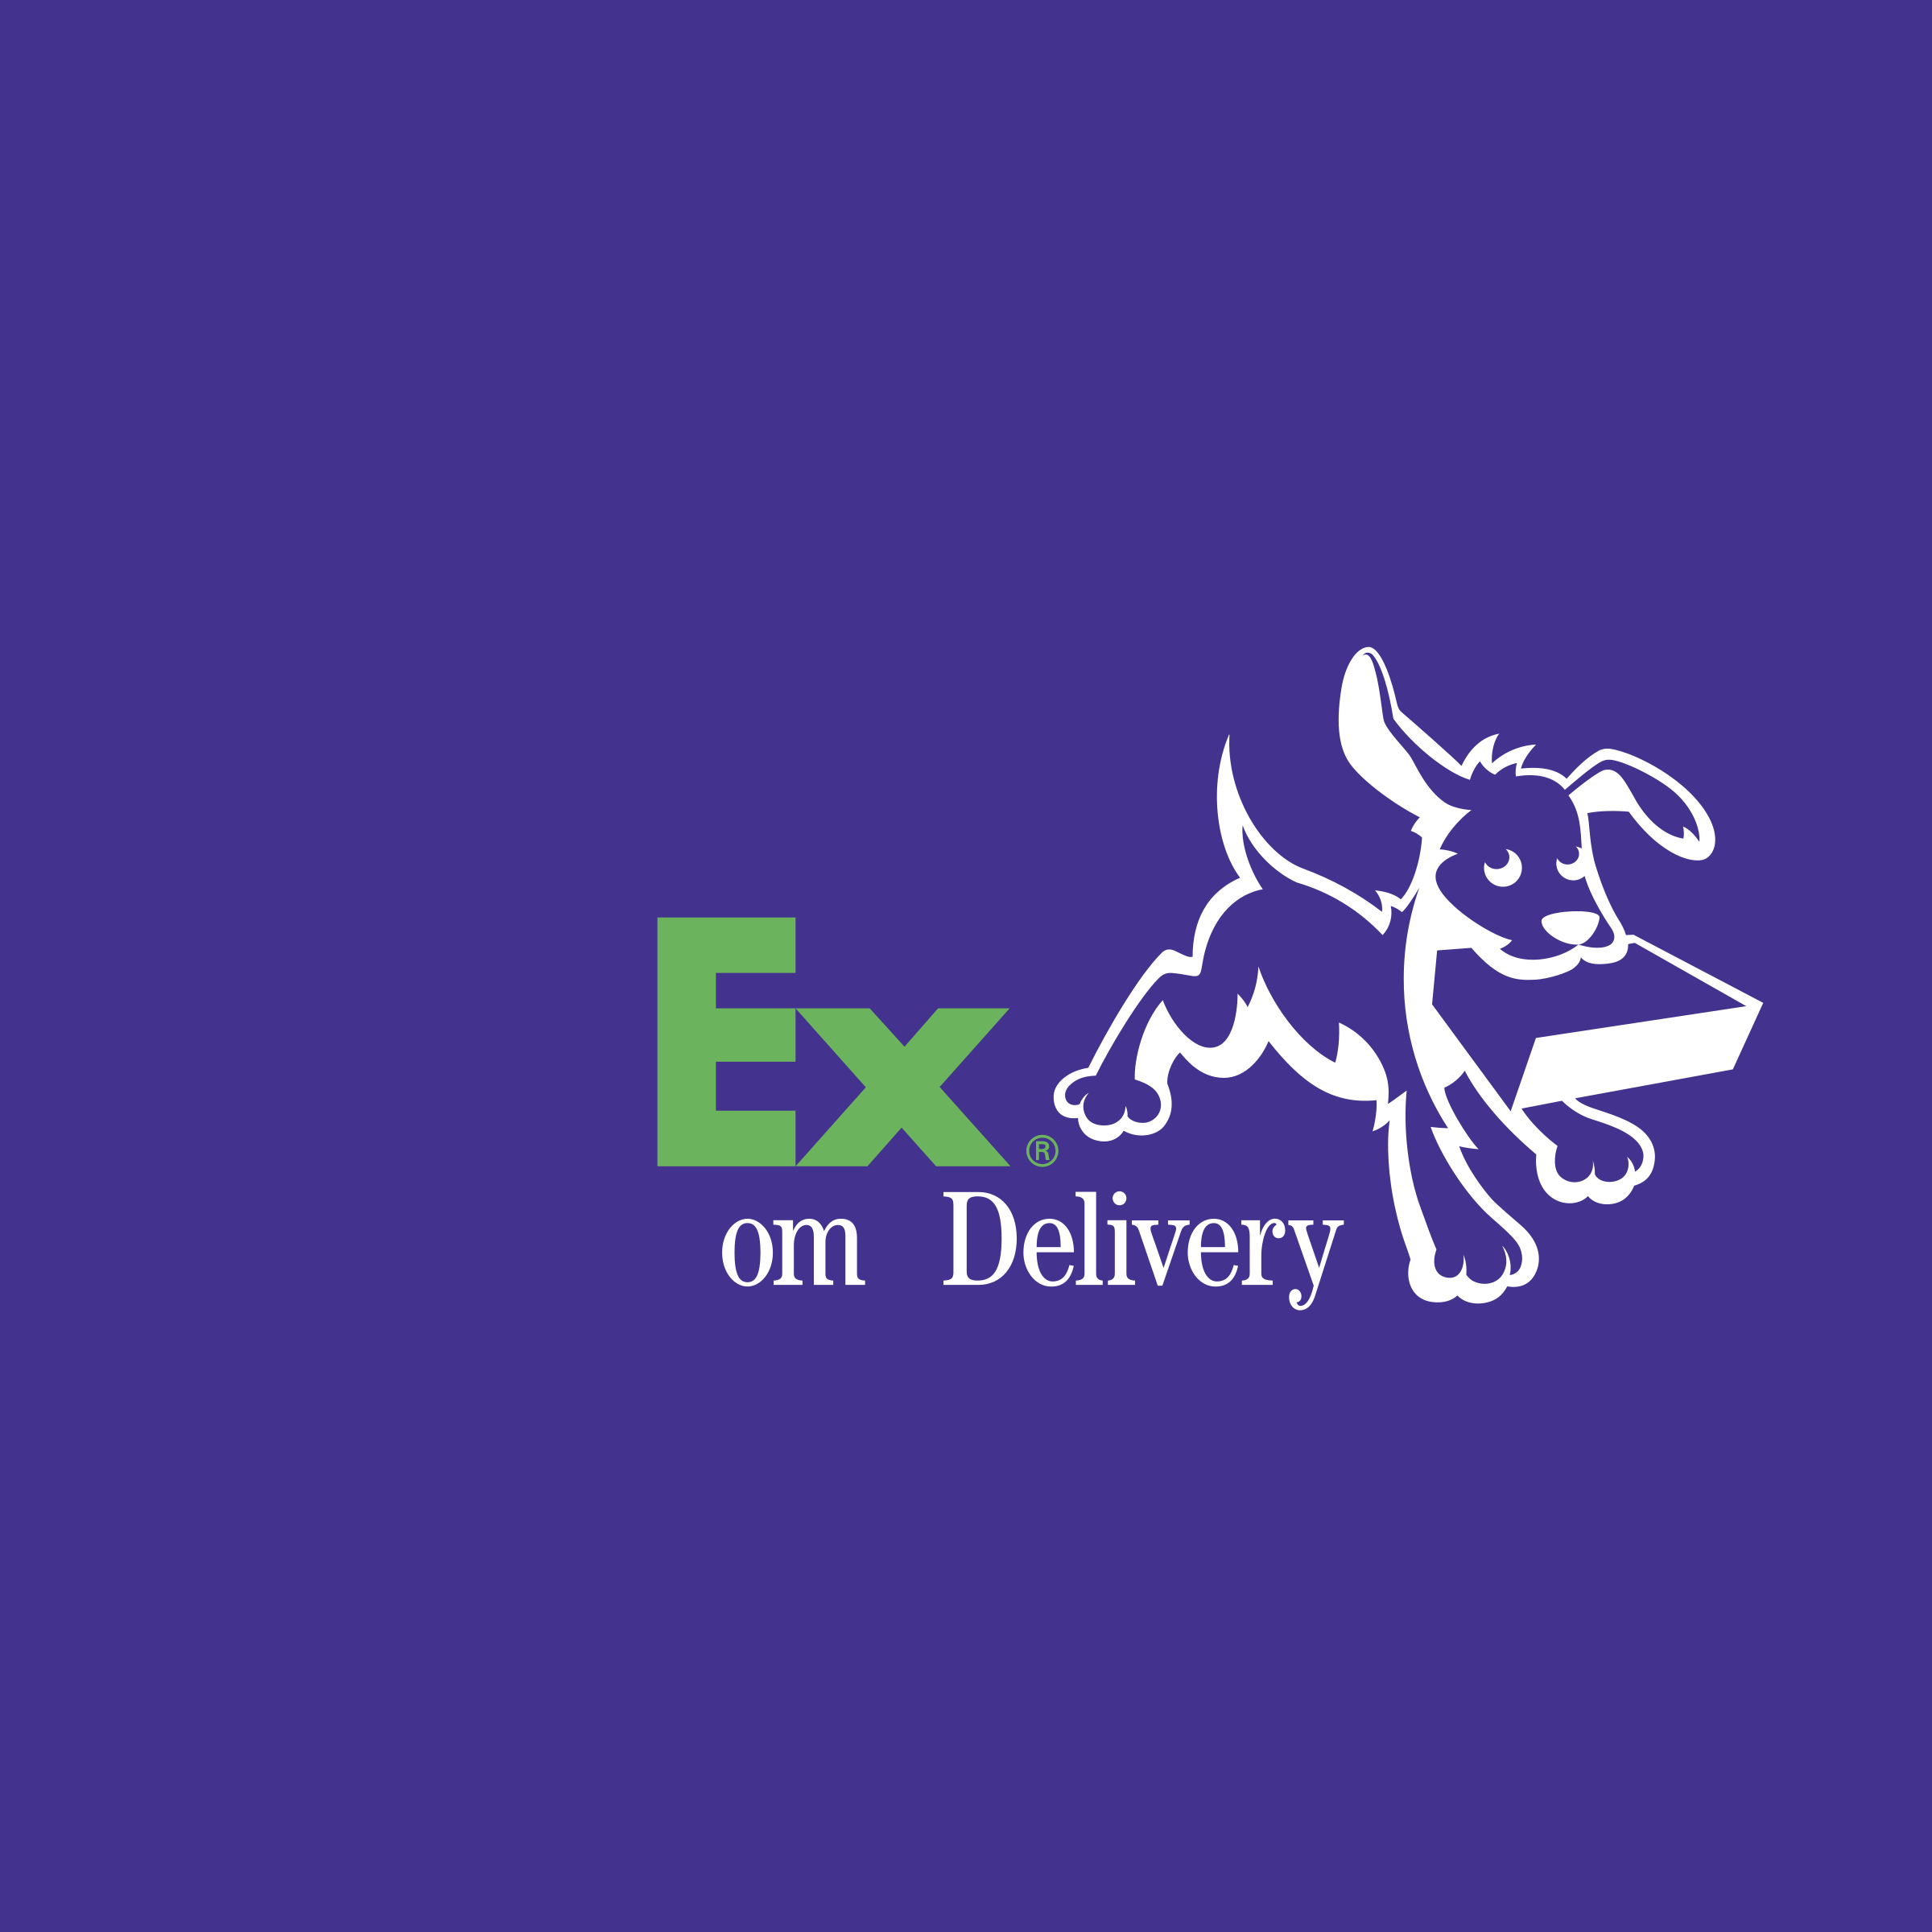 FedEx Home Delivery Logo - FedEx Home Delivery Logo PNG Transparent & SVG Vector